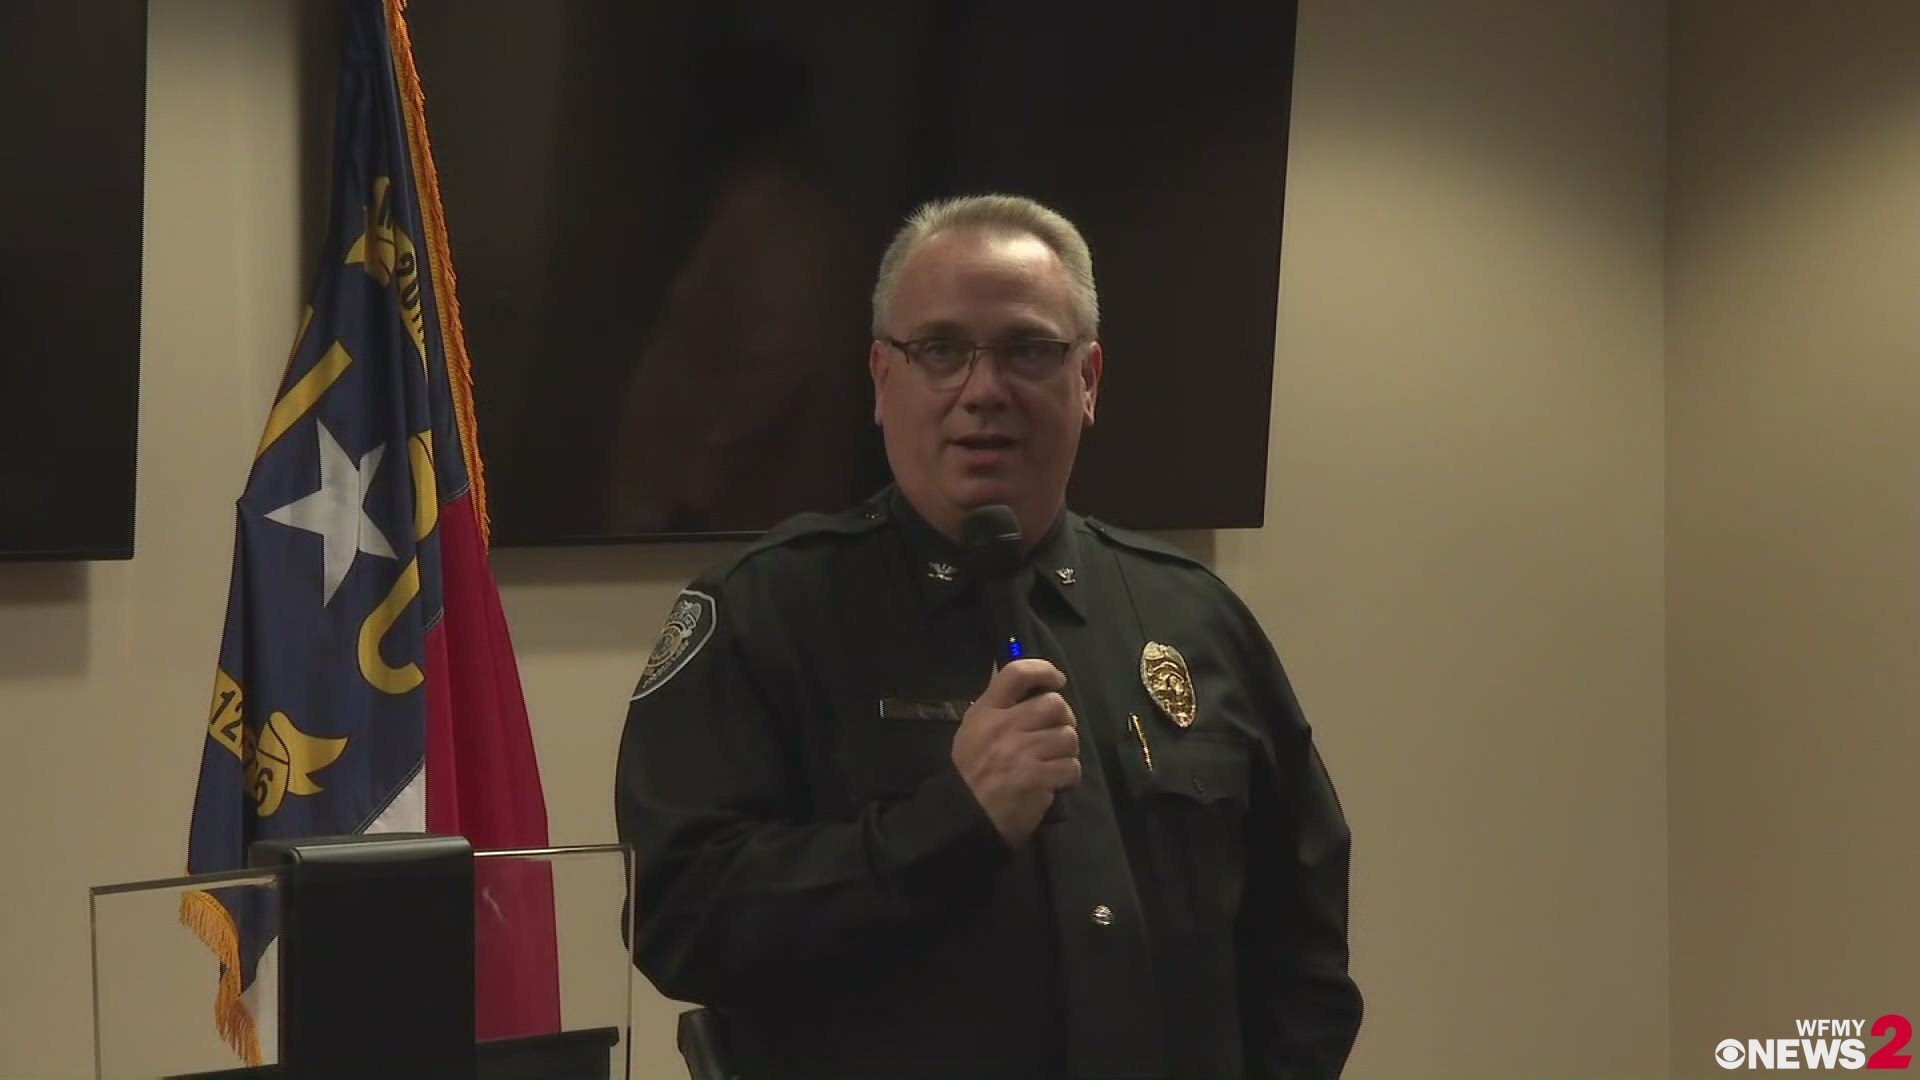 Wayne Scott became Greensboro Police Chief in 2015.